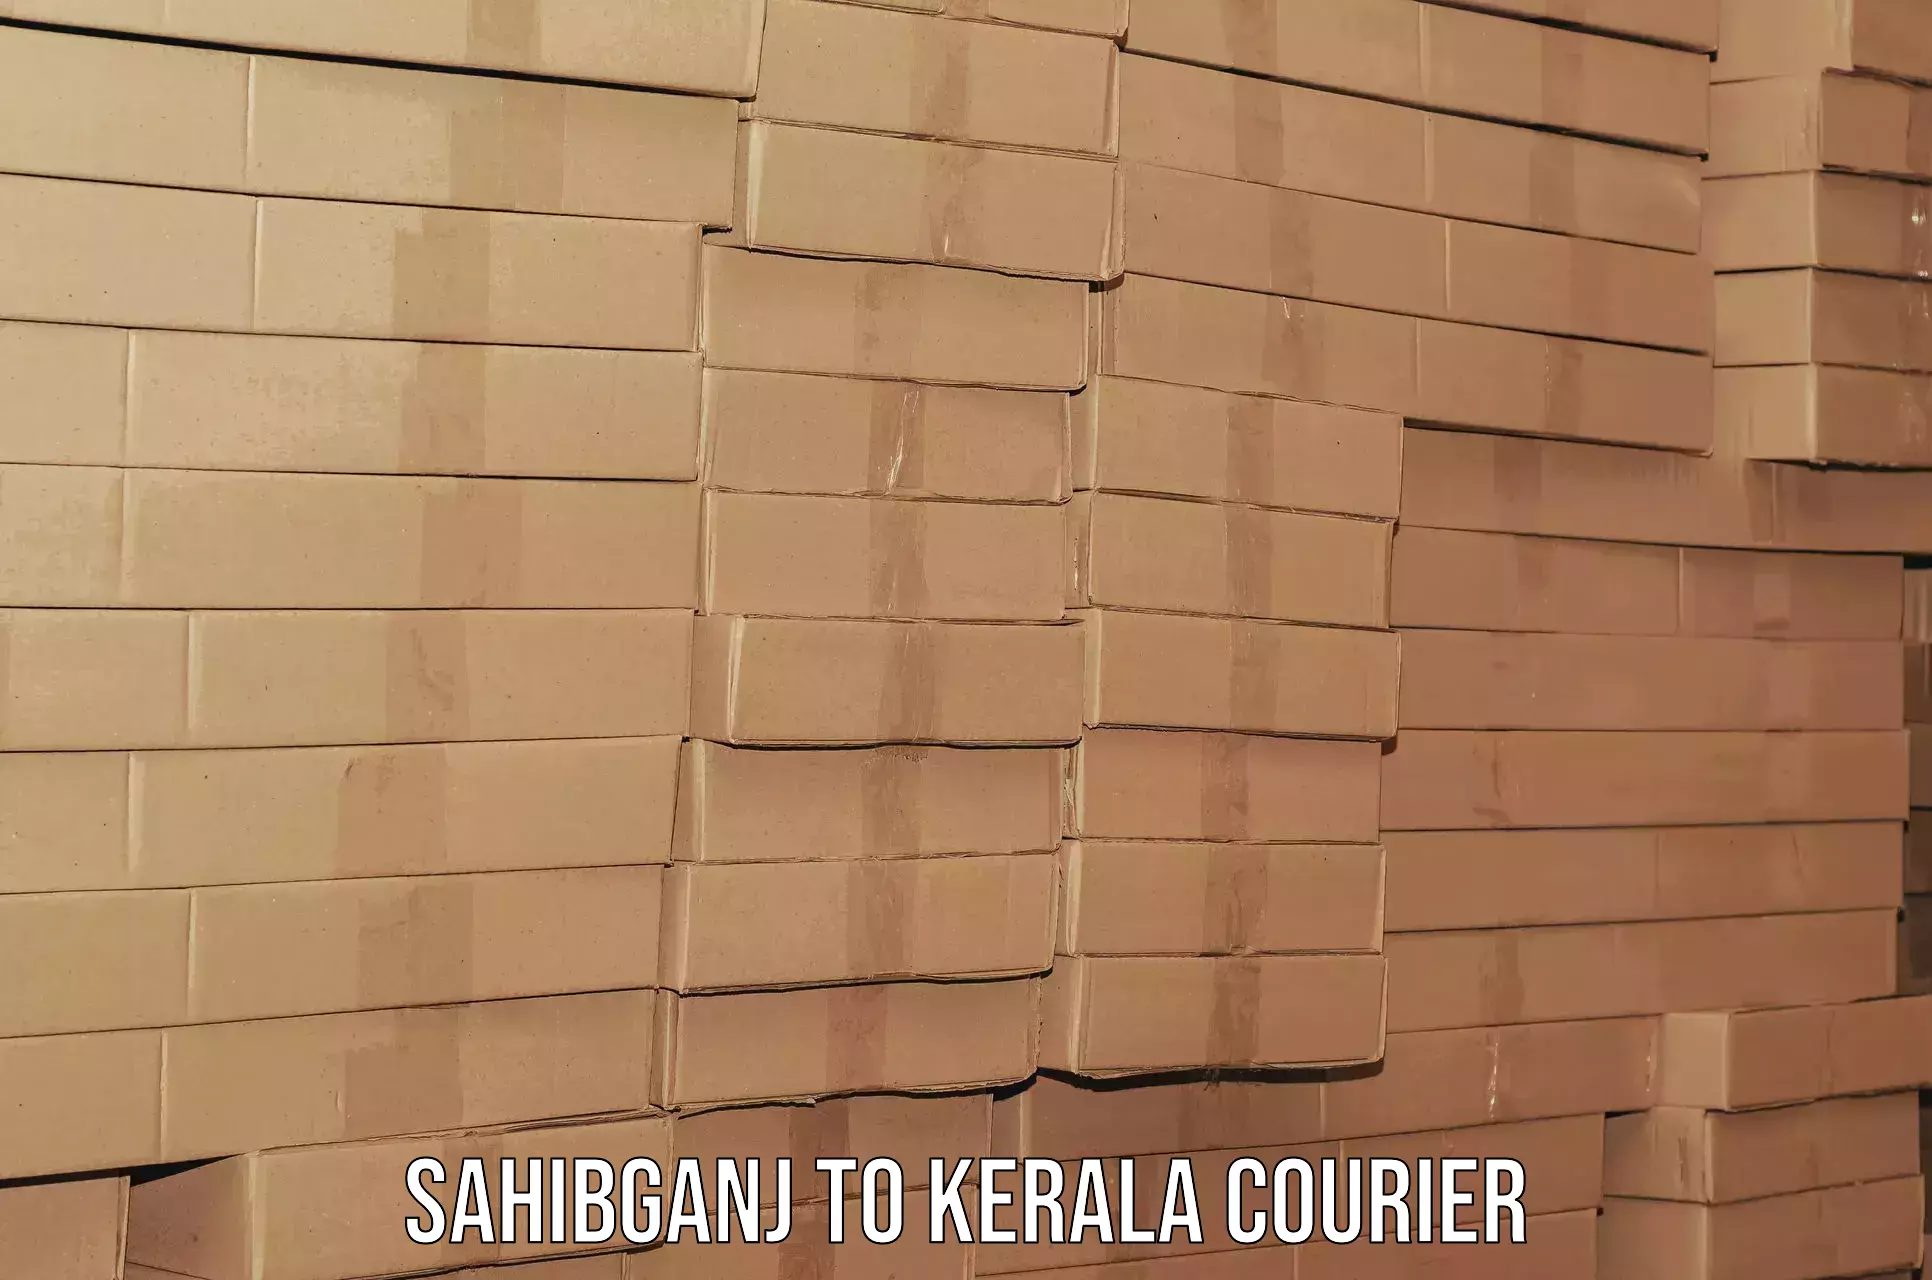 Moving and packing experts Sahibganj to Kerala